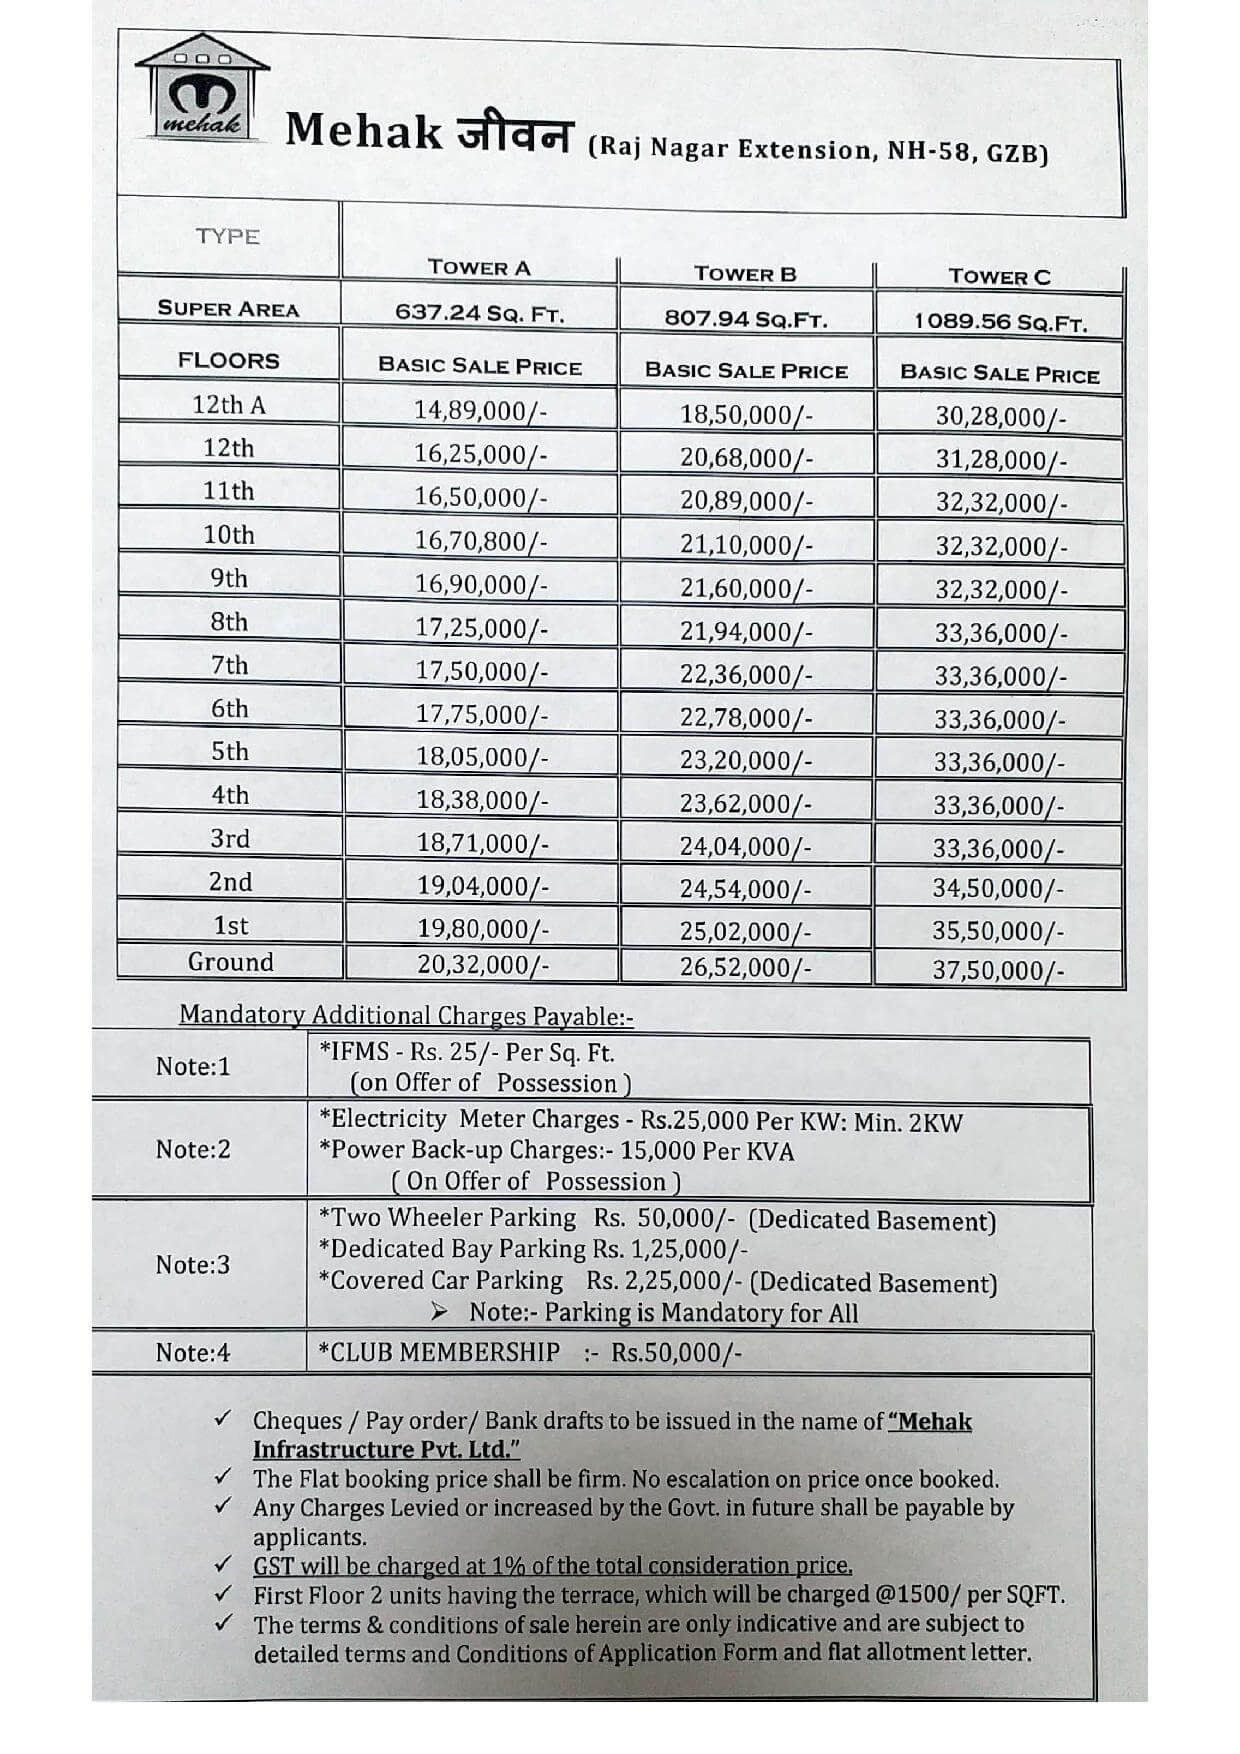 Mehak Jeevan Price List